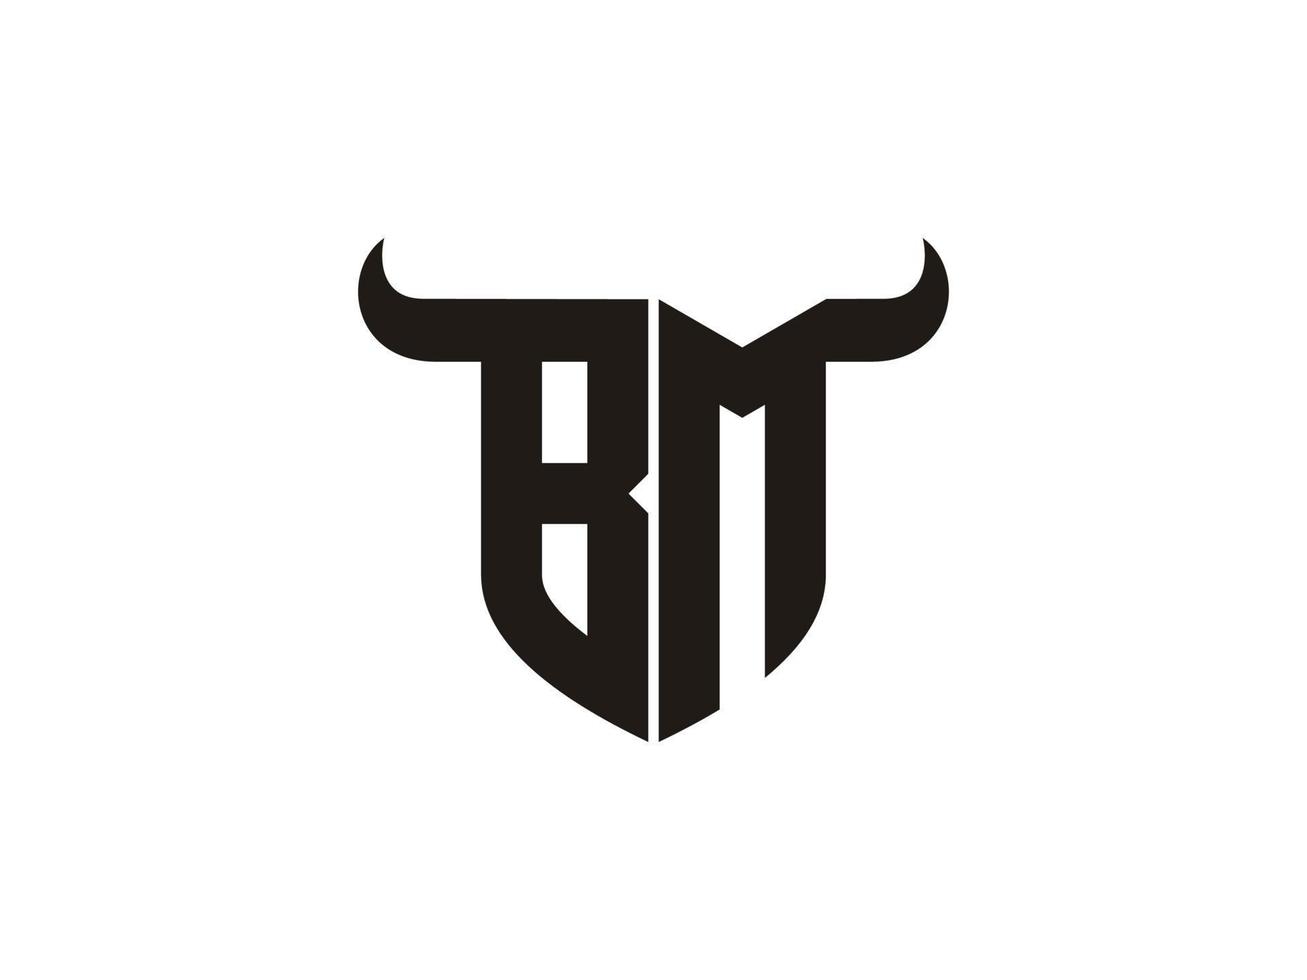 ursprüngliches bm bull logo design. vektor